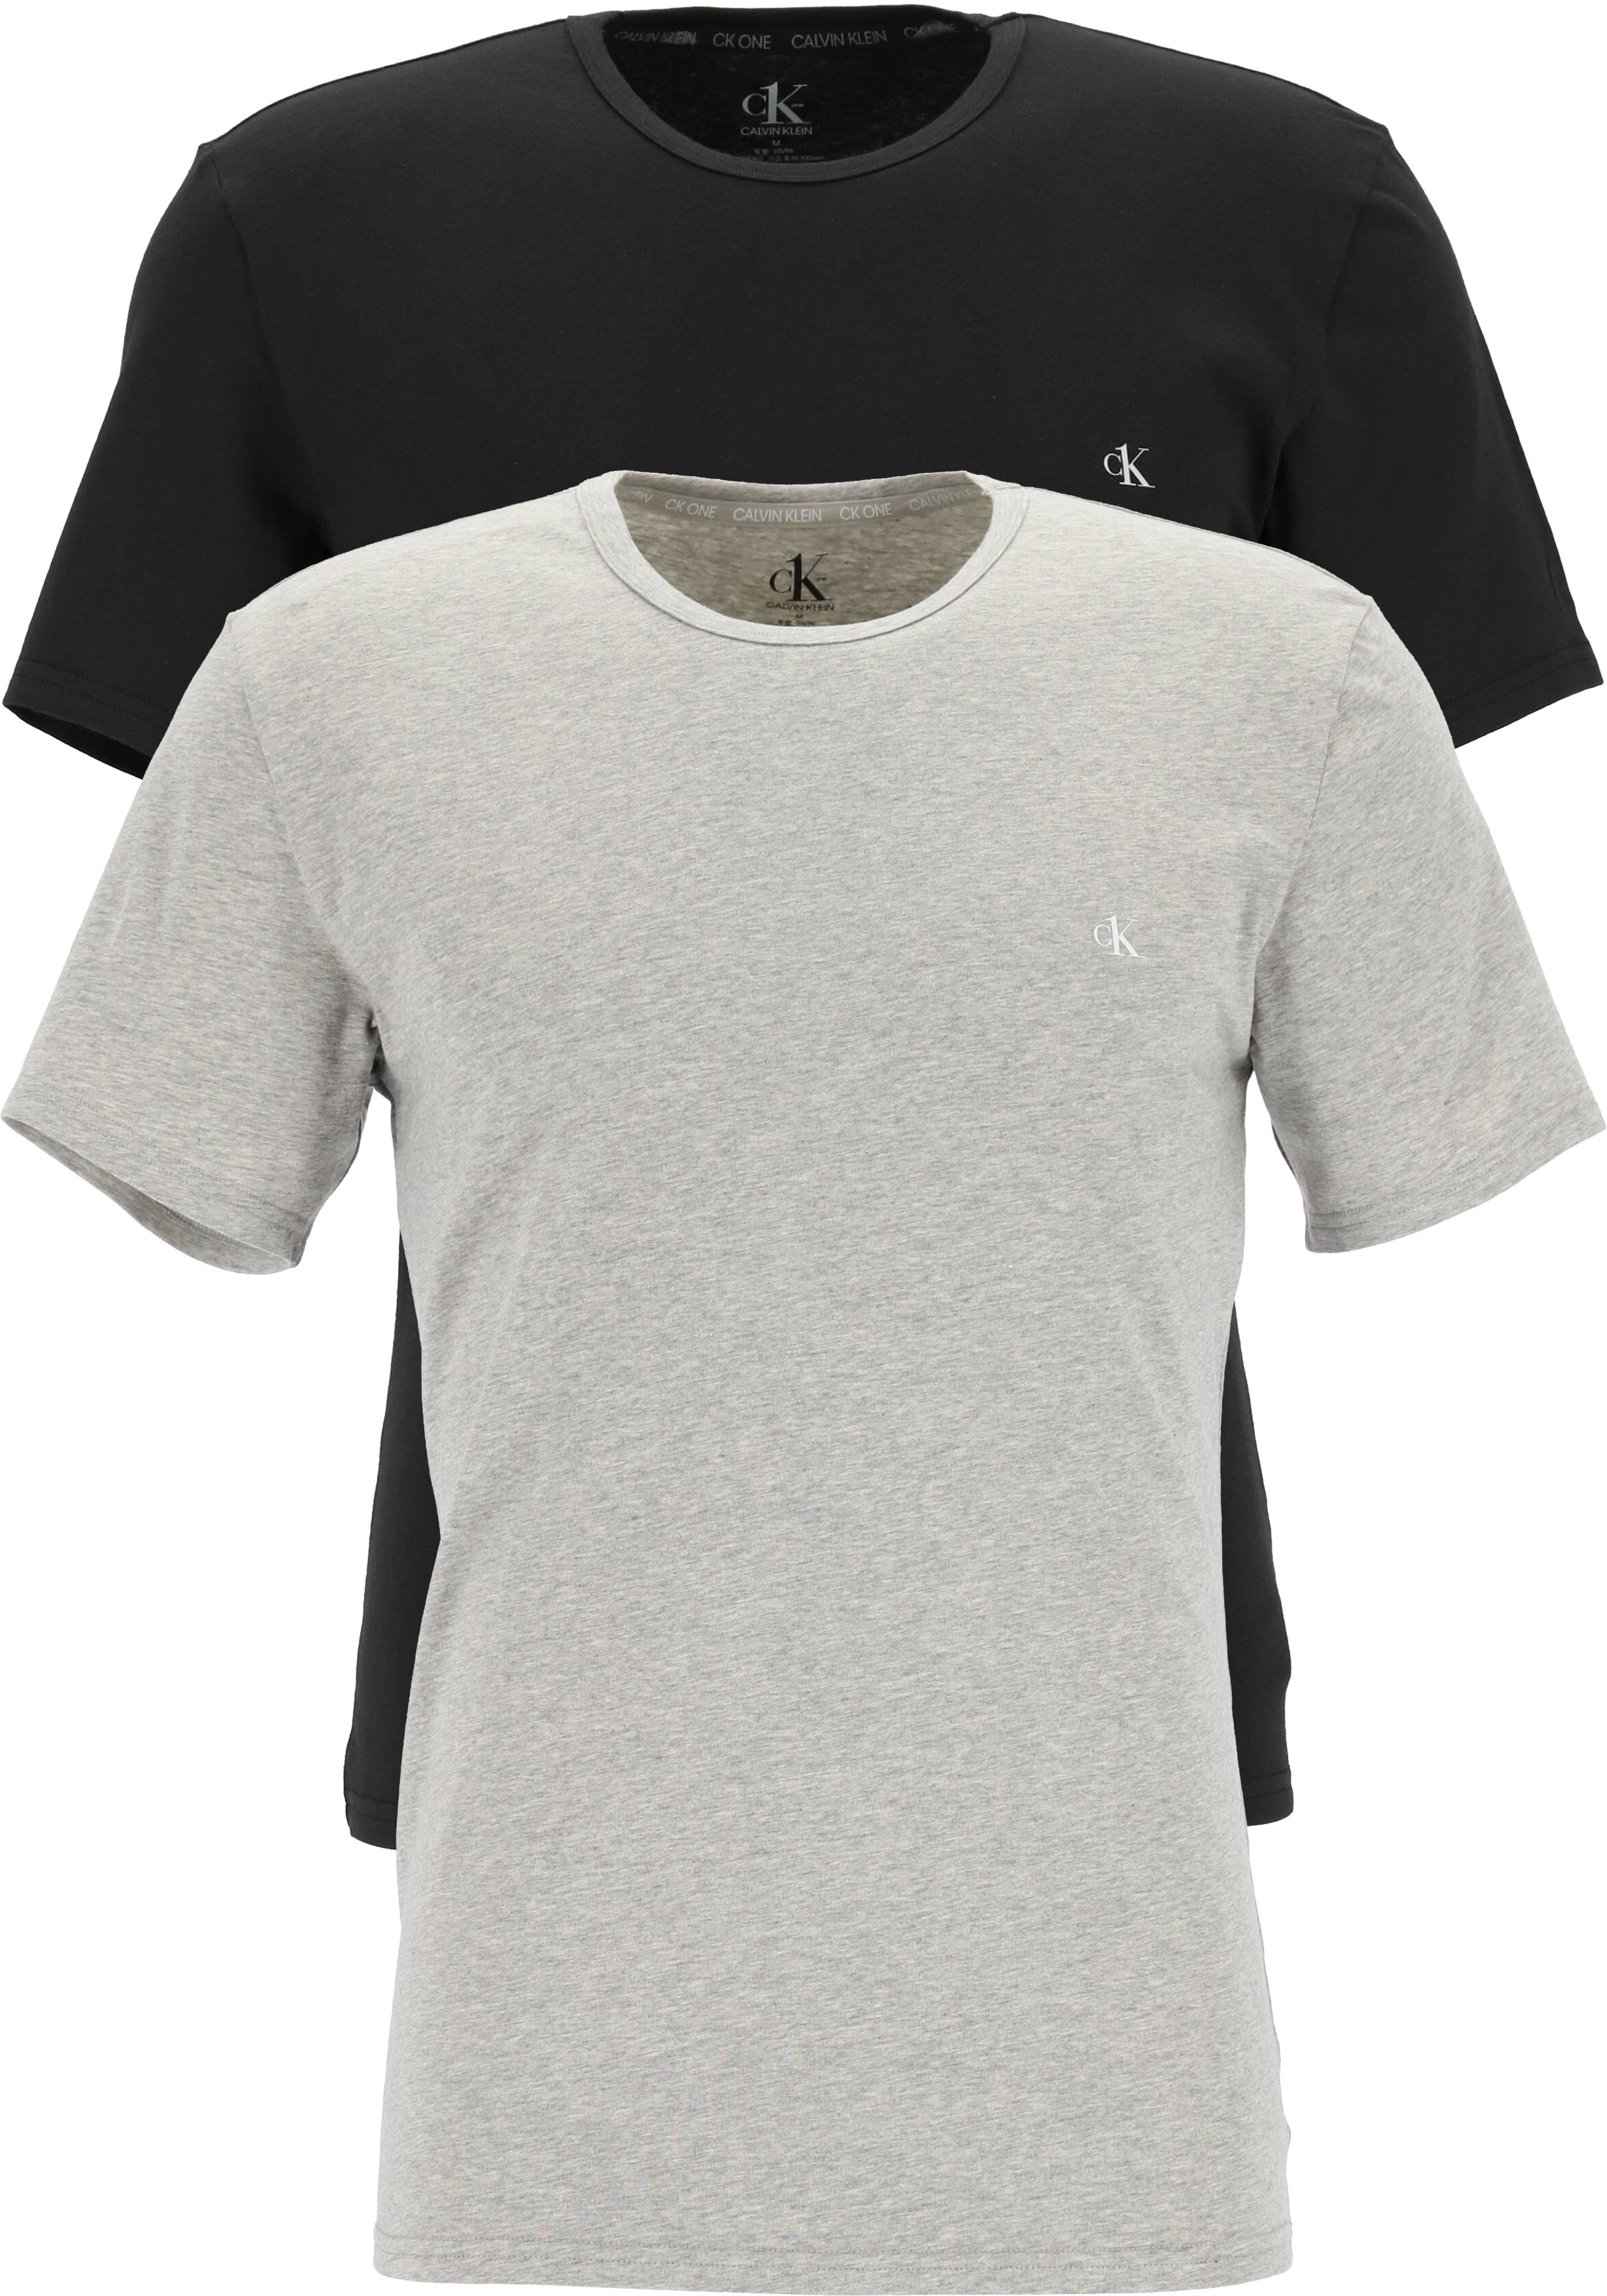 Calvin Klein CK ONE cotton crew neck T-shirts (2-pack), heren T-shirts O-hals, zwart en grijs melange